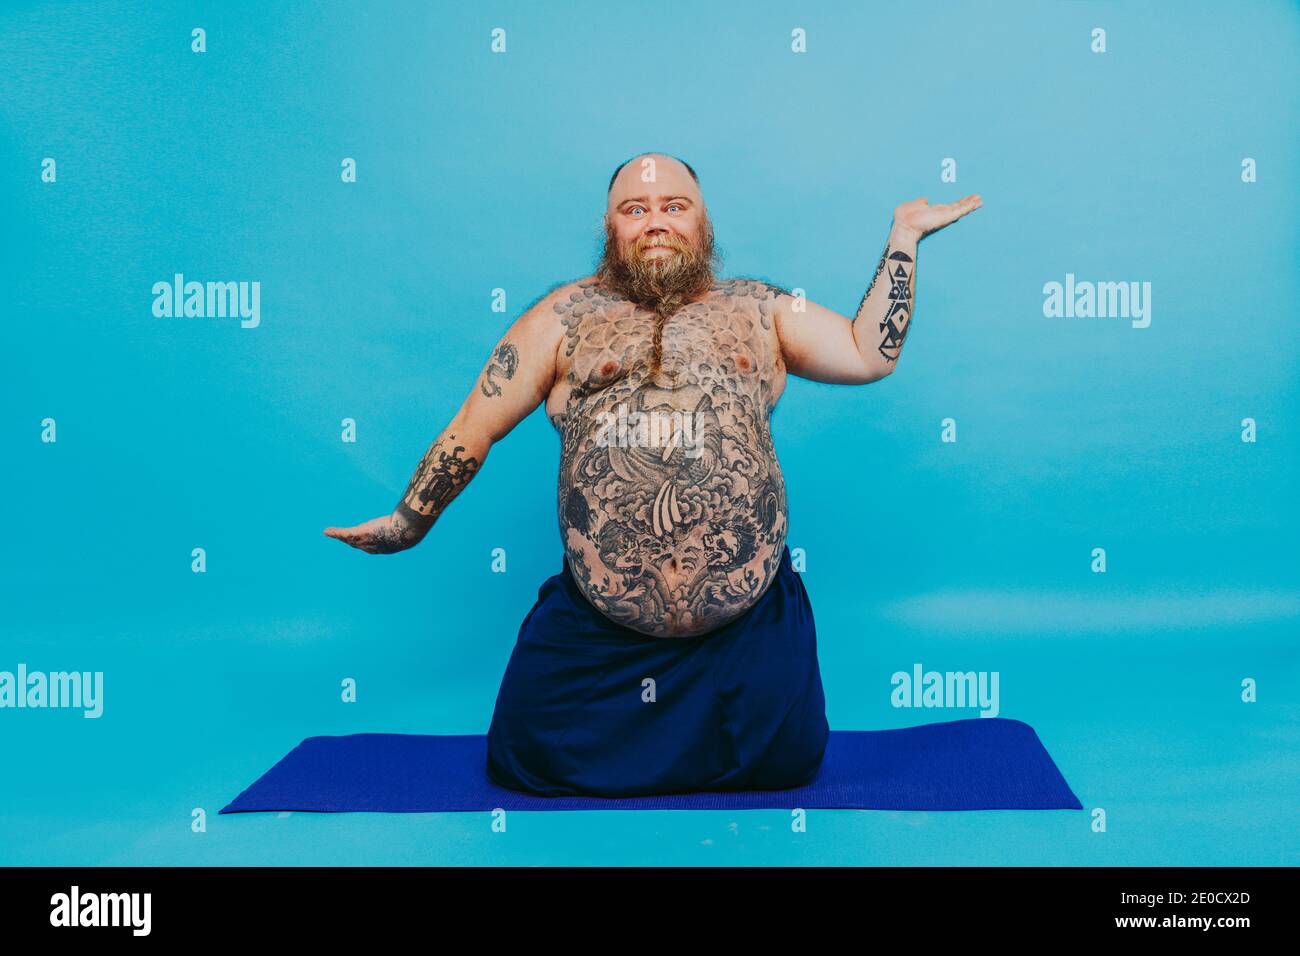 Funny fat man doing yoga meditation, funny and ironic character Stock Photo